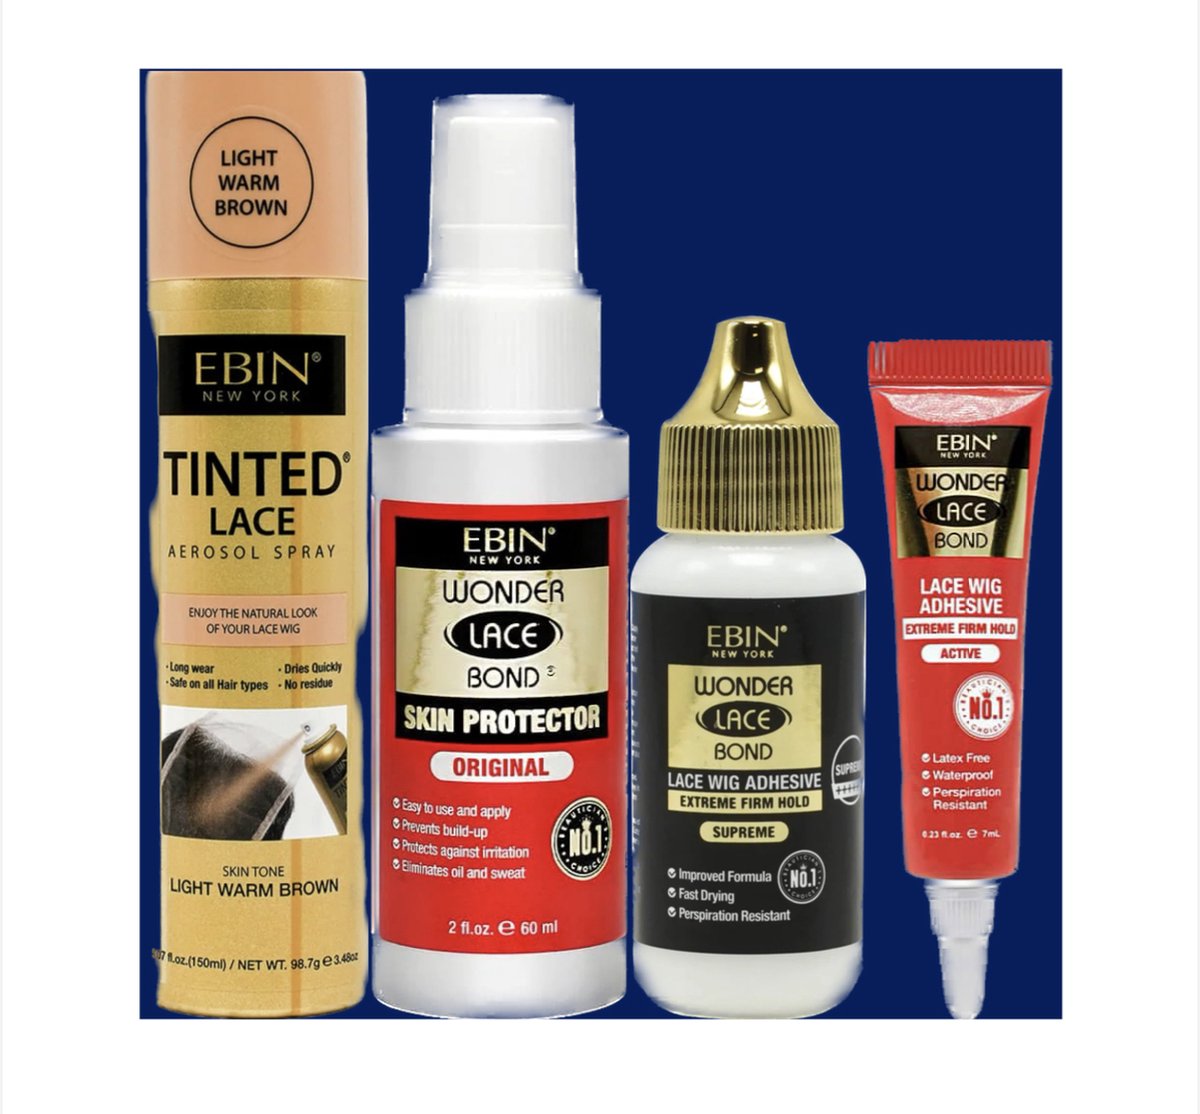 Ebin New York - SET - inclusief tint lace spray , skin protector , wonder lace adhesive en lace wig adhesive - bundle set